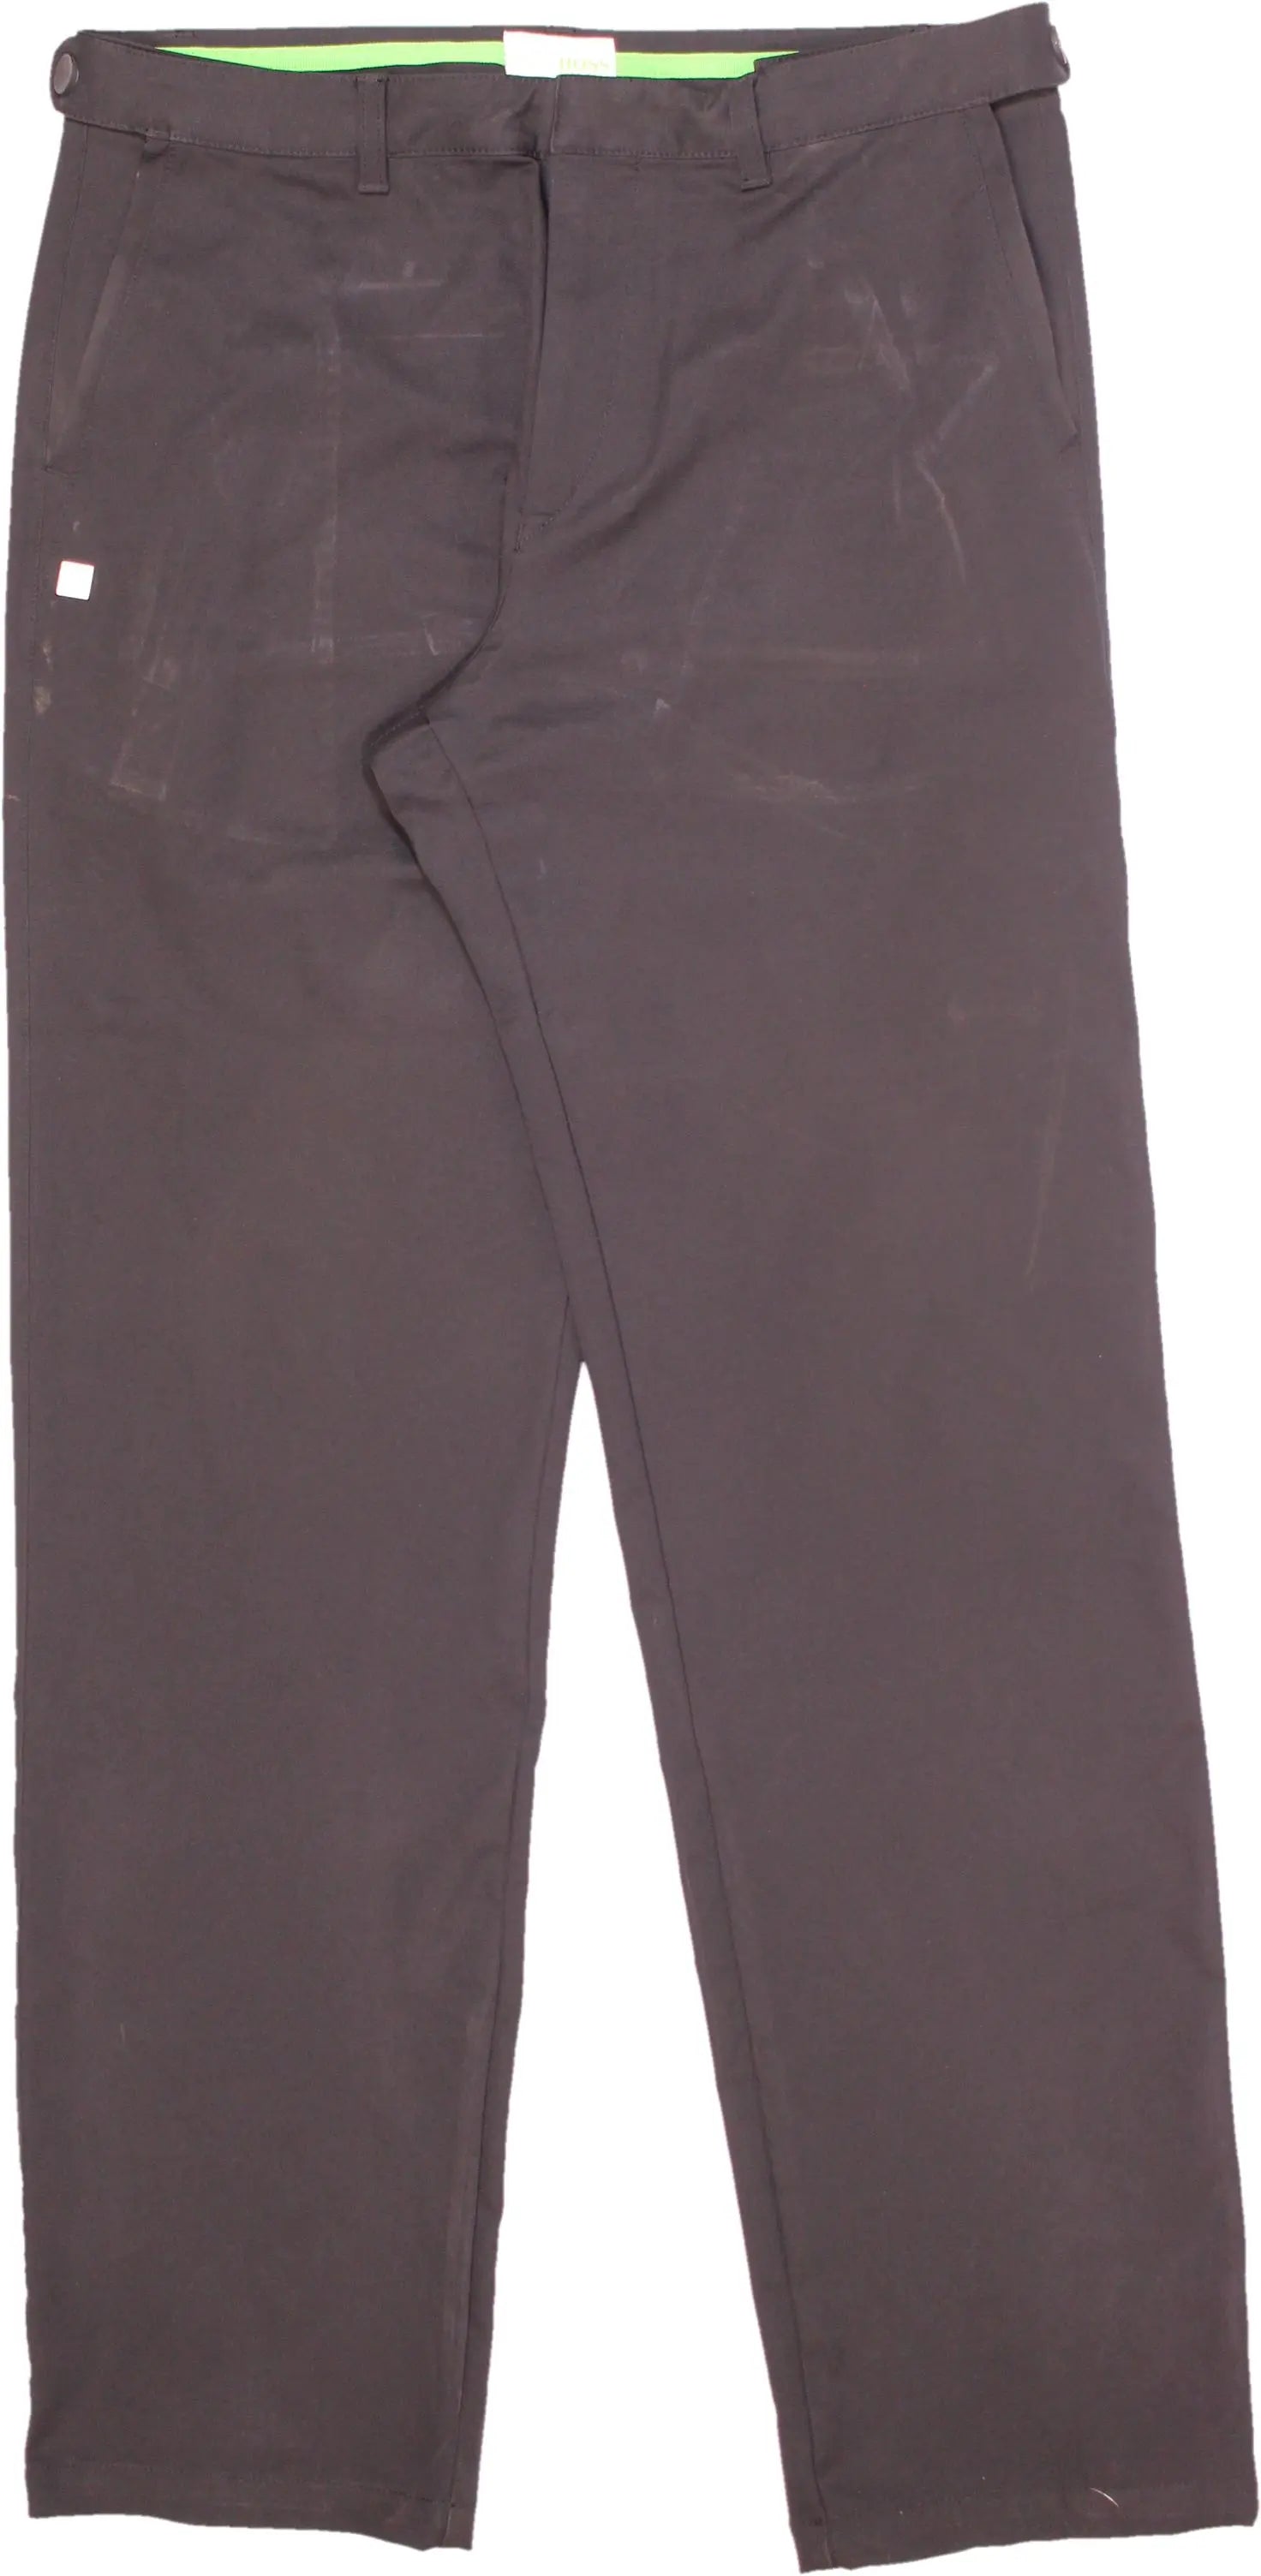 Hugo Boss - Hugo Boss Regular Fit Pants- ThriftTale.com - Vintage and second handclothing